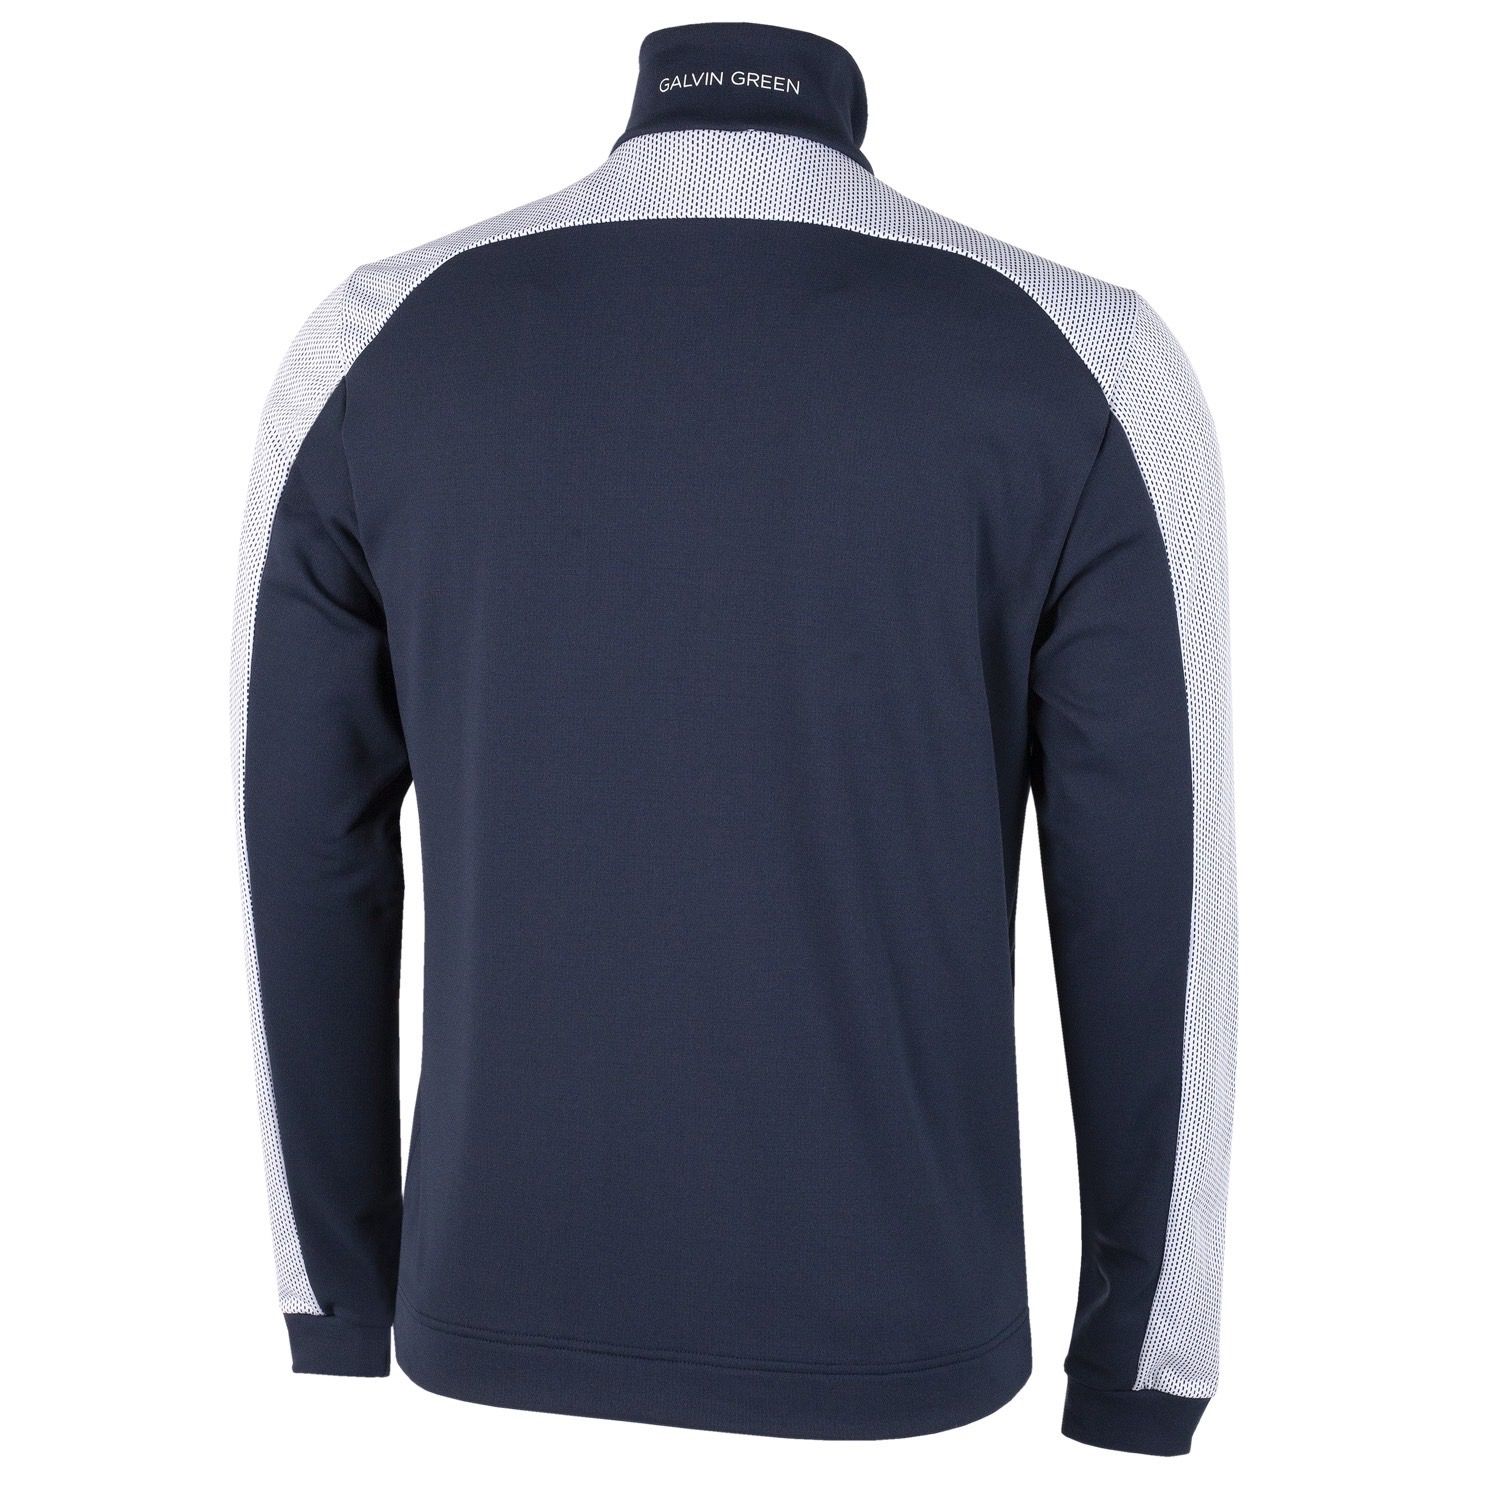 Galvin Green Dwight Insula Half Zip Sweater Navy/White | Scottsdale Golf